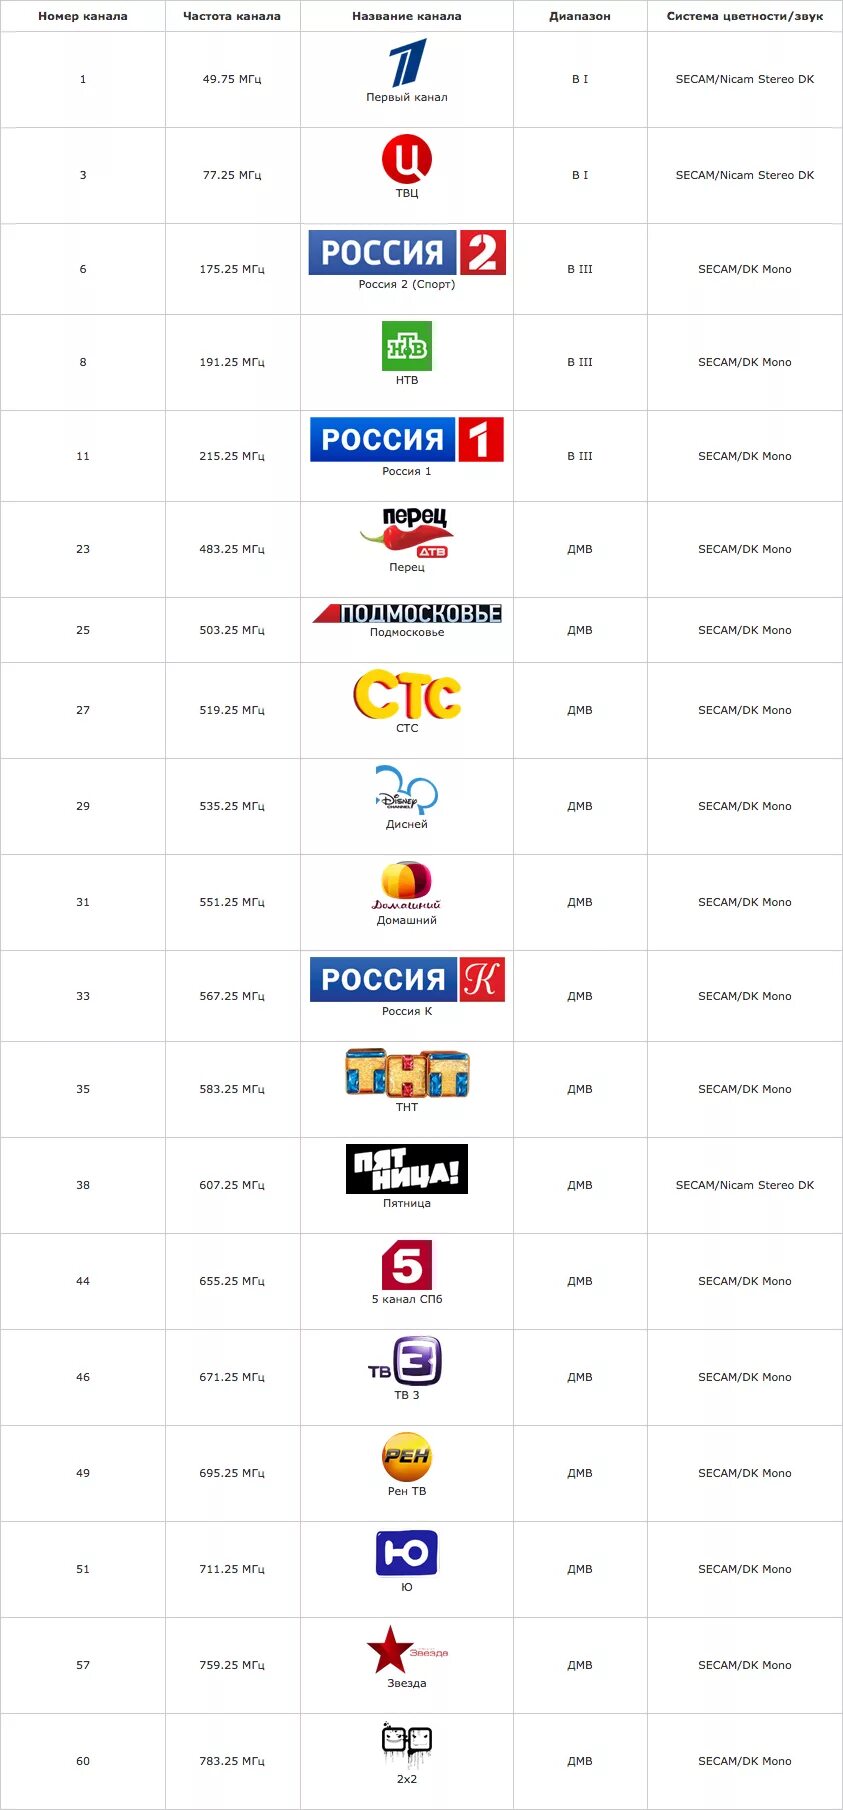 Цифровое телевидение на сегодня все каналы. Частоты каналов цифрового телевидения DVB-t2 таблица.